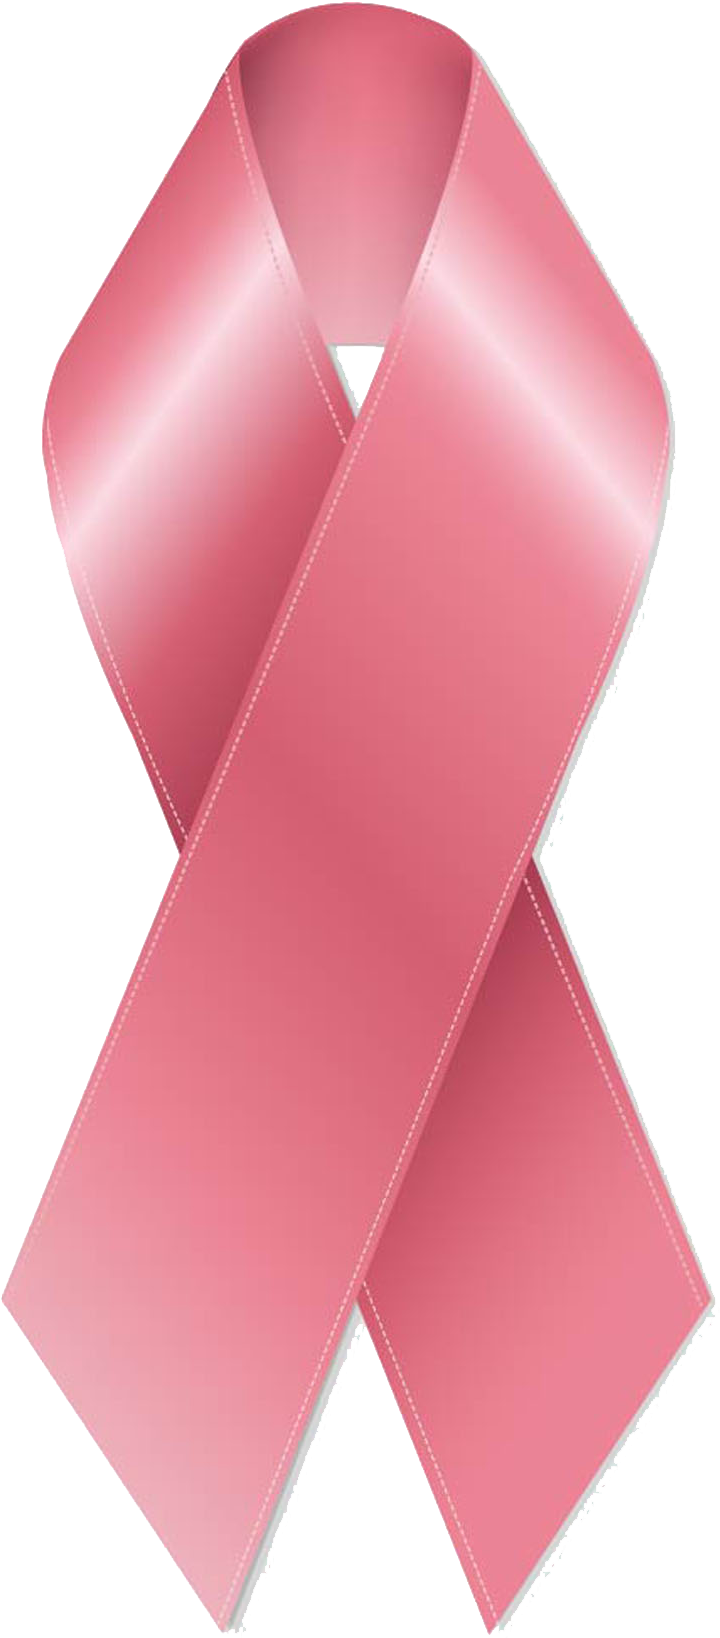 Breast Cancer Ribbon - Pink (1228x1887)